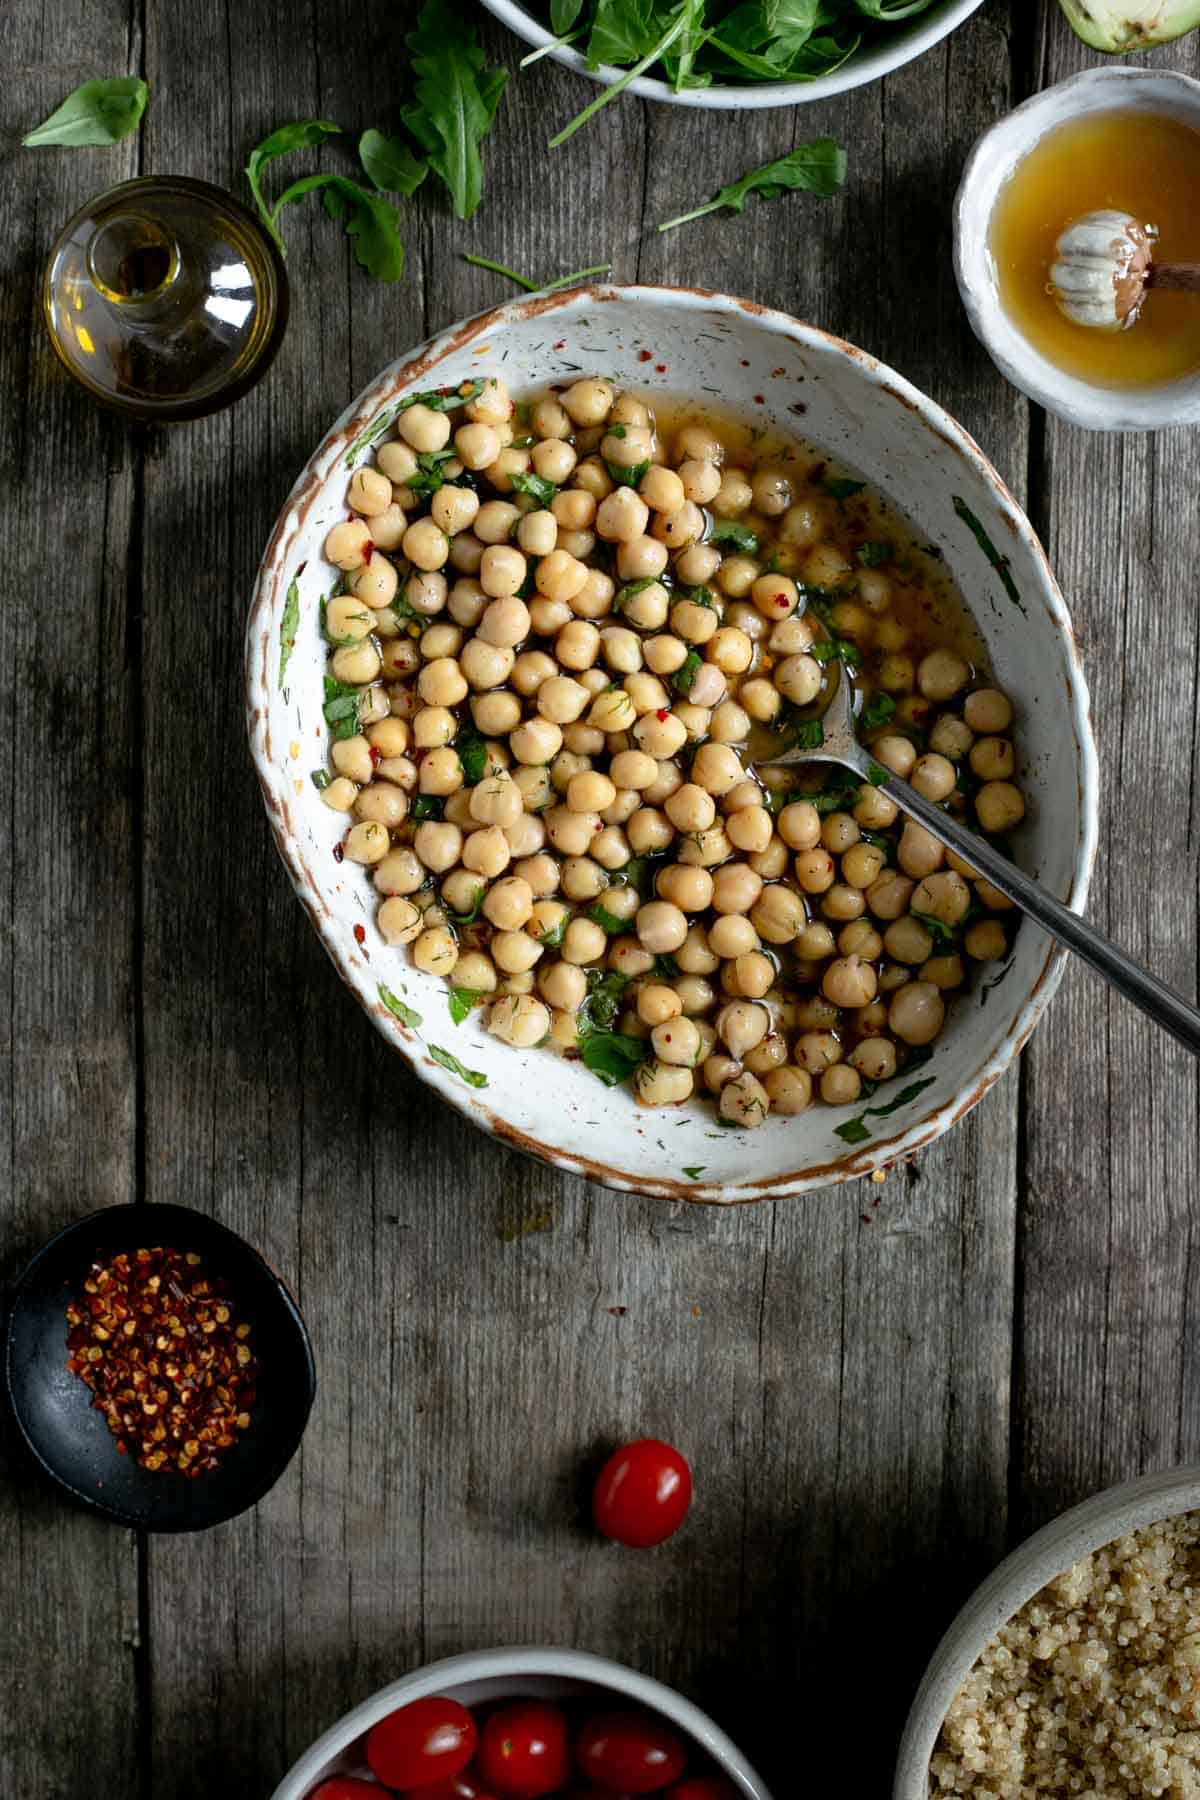 Marinated chickpeas for tomato and quinoa salad jars #vegan #veganrecipe #saladjars | via @annabanana.co